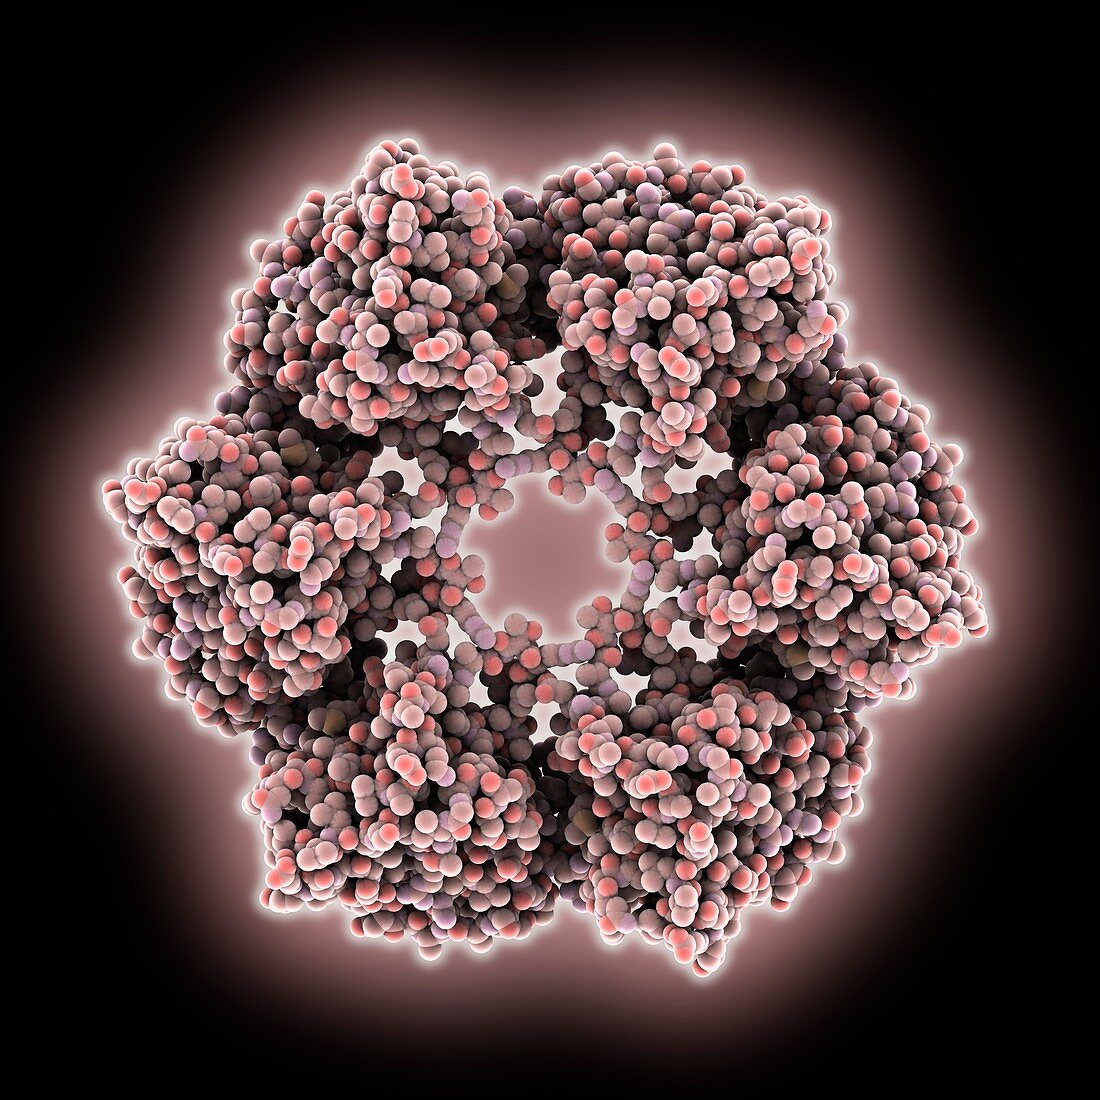 Toscana virus nucleocapsid protein